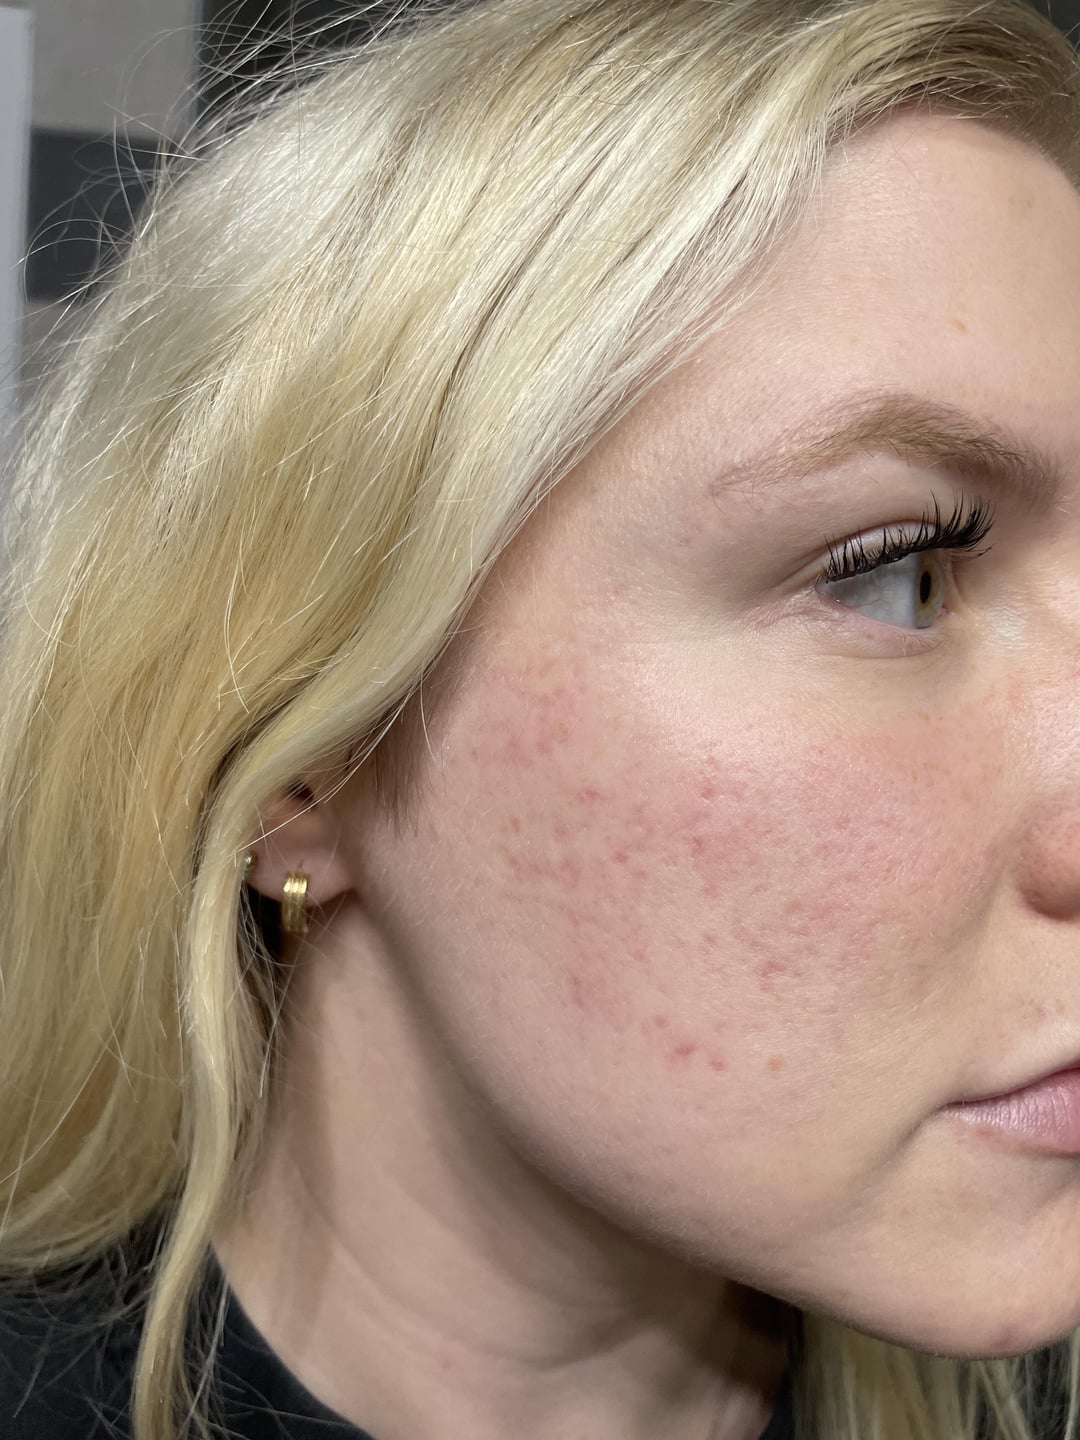 getting-rid-of-post-inflammatory-erythema-and-acne-scars-v0-u9jthx3n4uma1.jpg